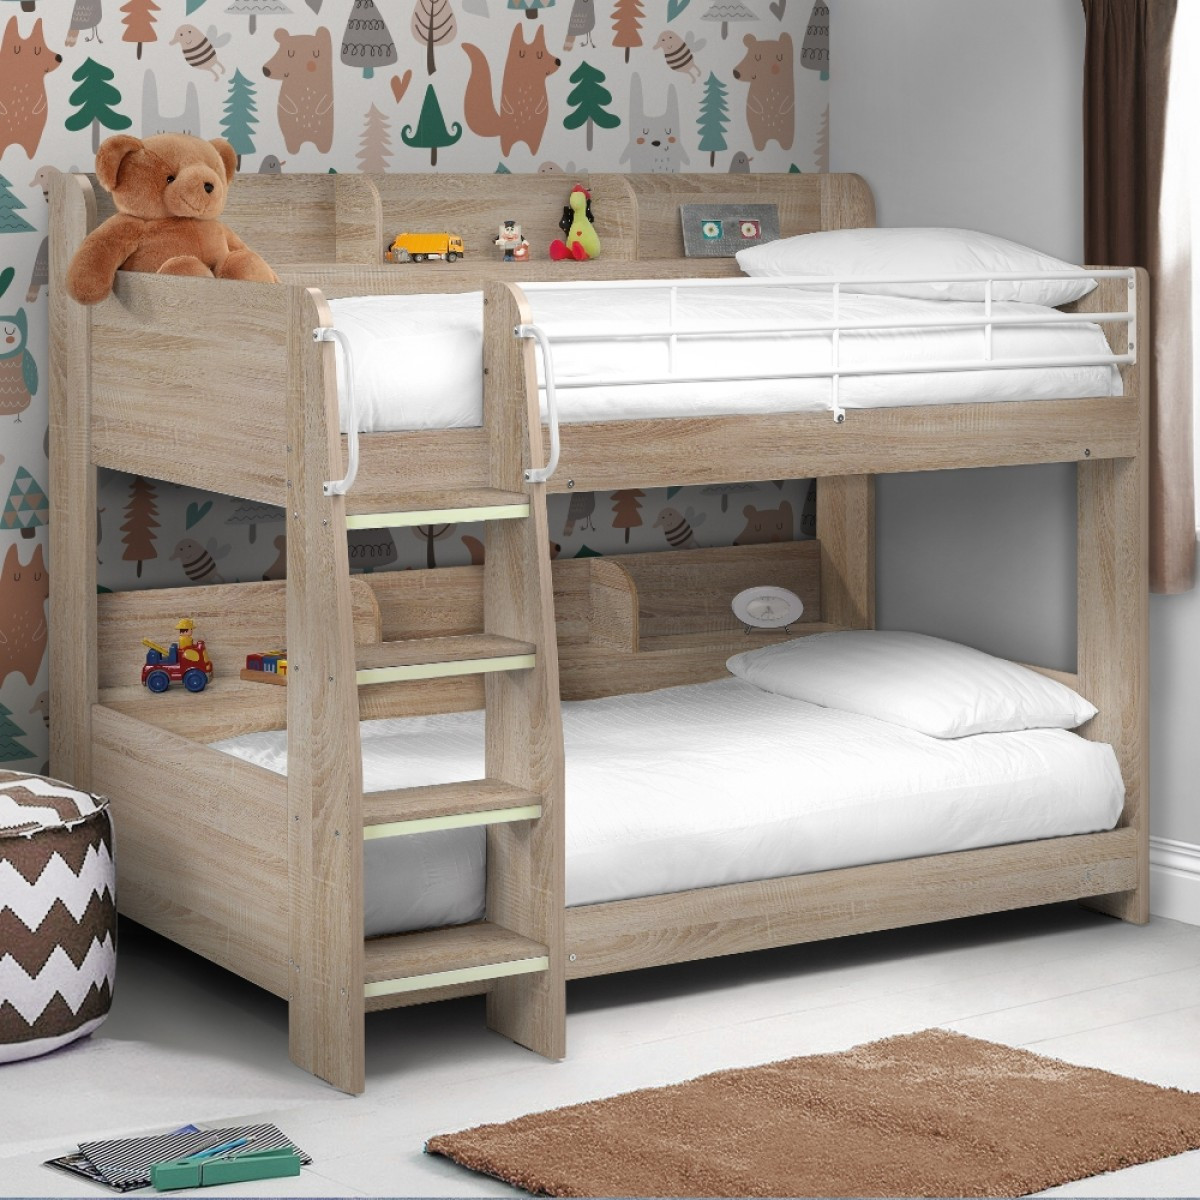 Childrens Loft Bed With Storage
 Domino Oak Wooden and Metal Kids Storage Bunk Bed